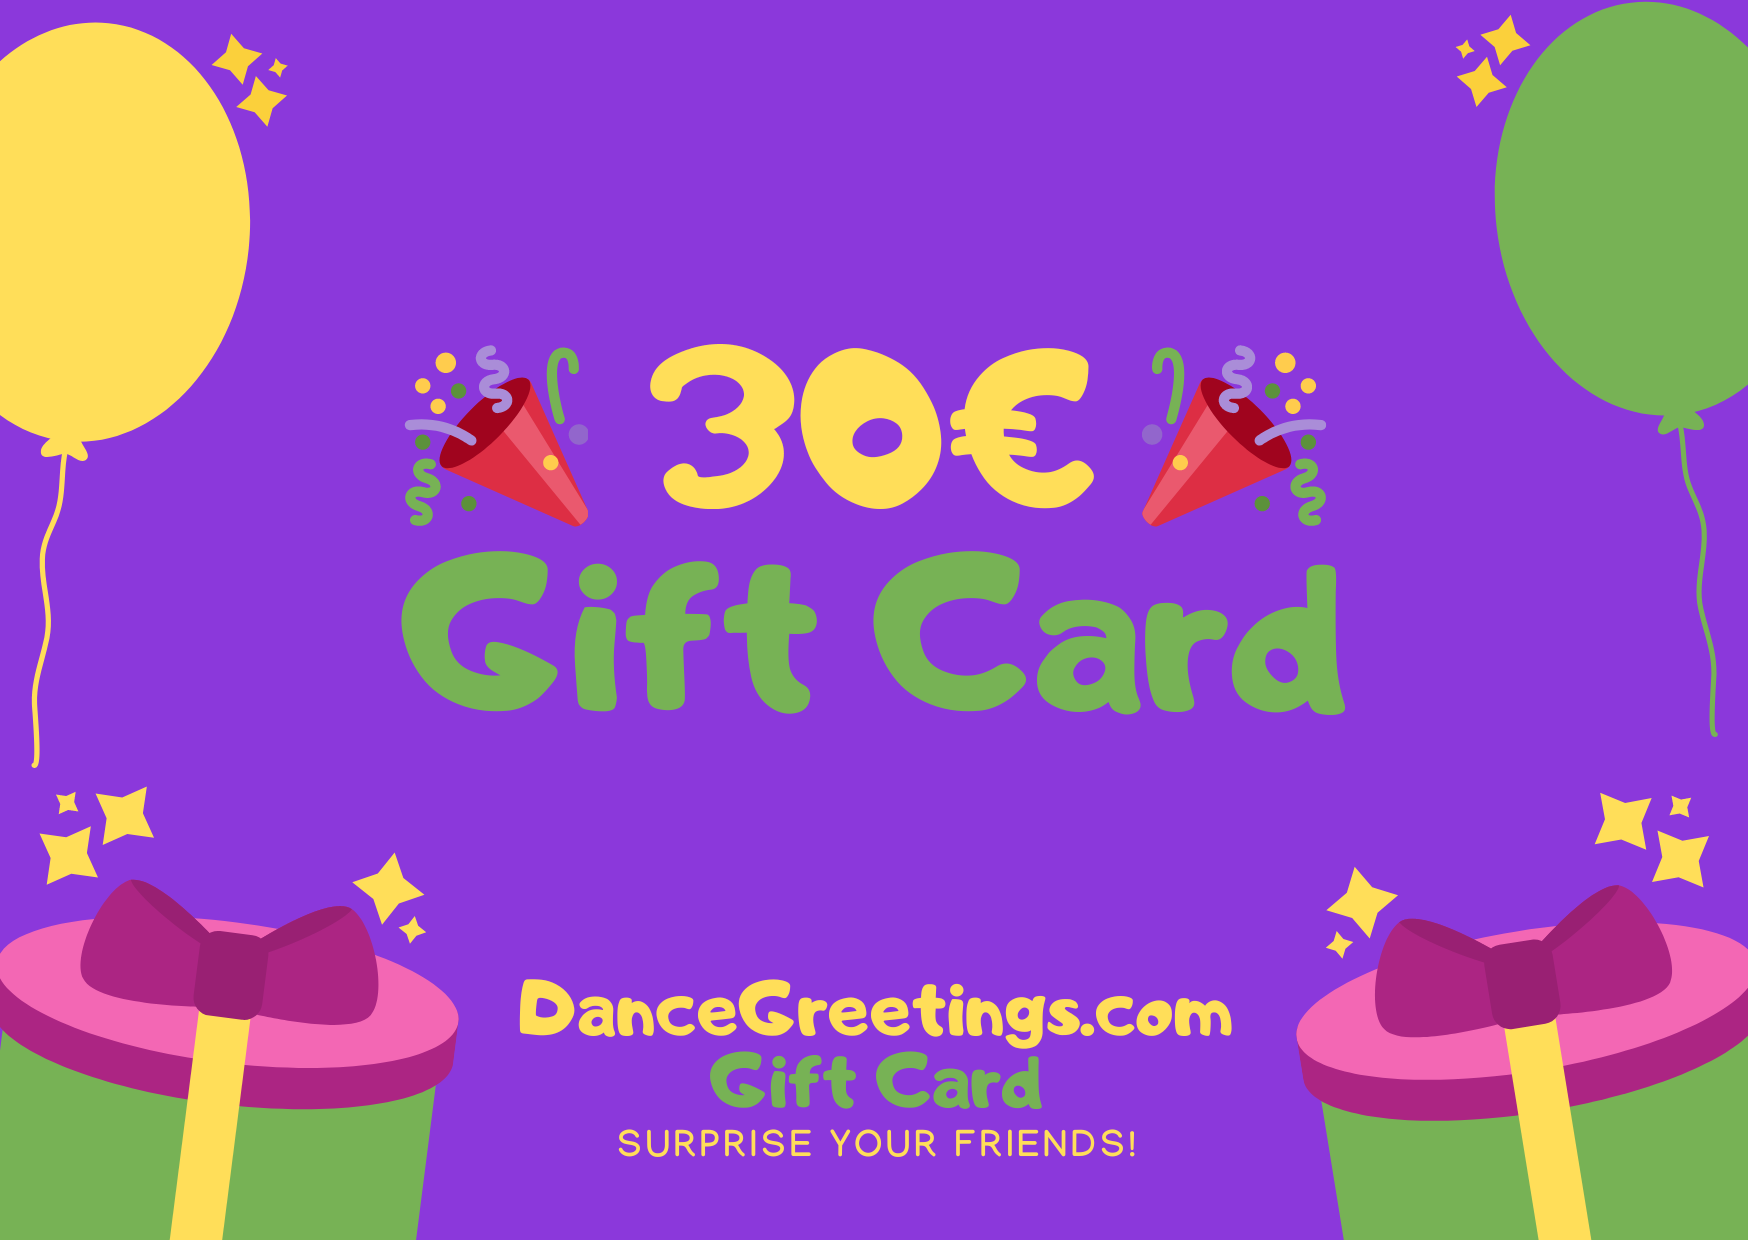 DanceGreetings Gift Card